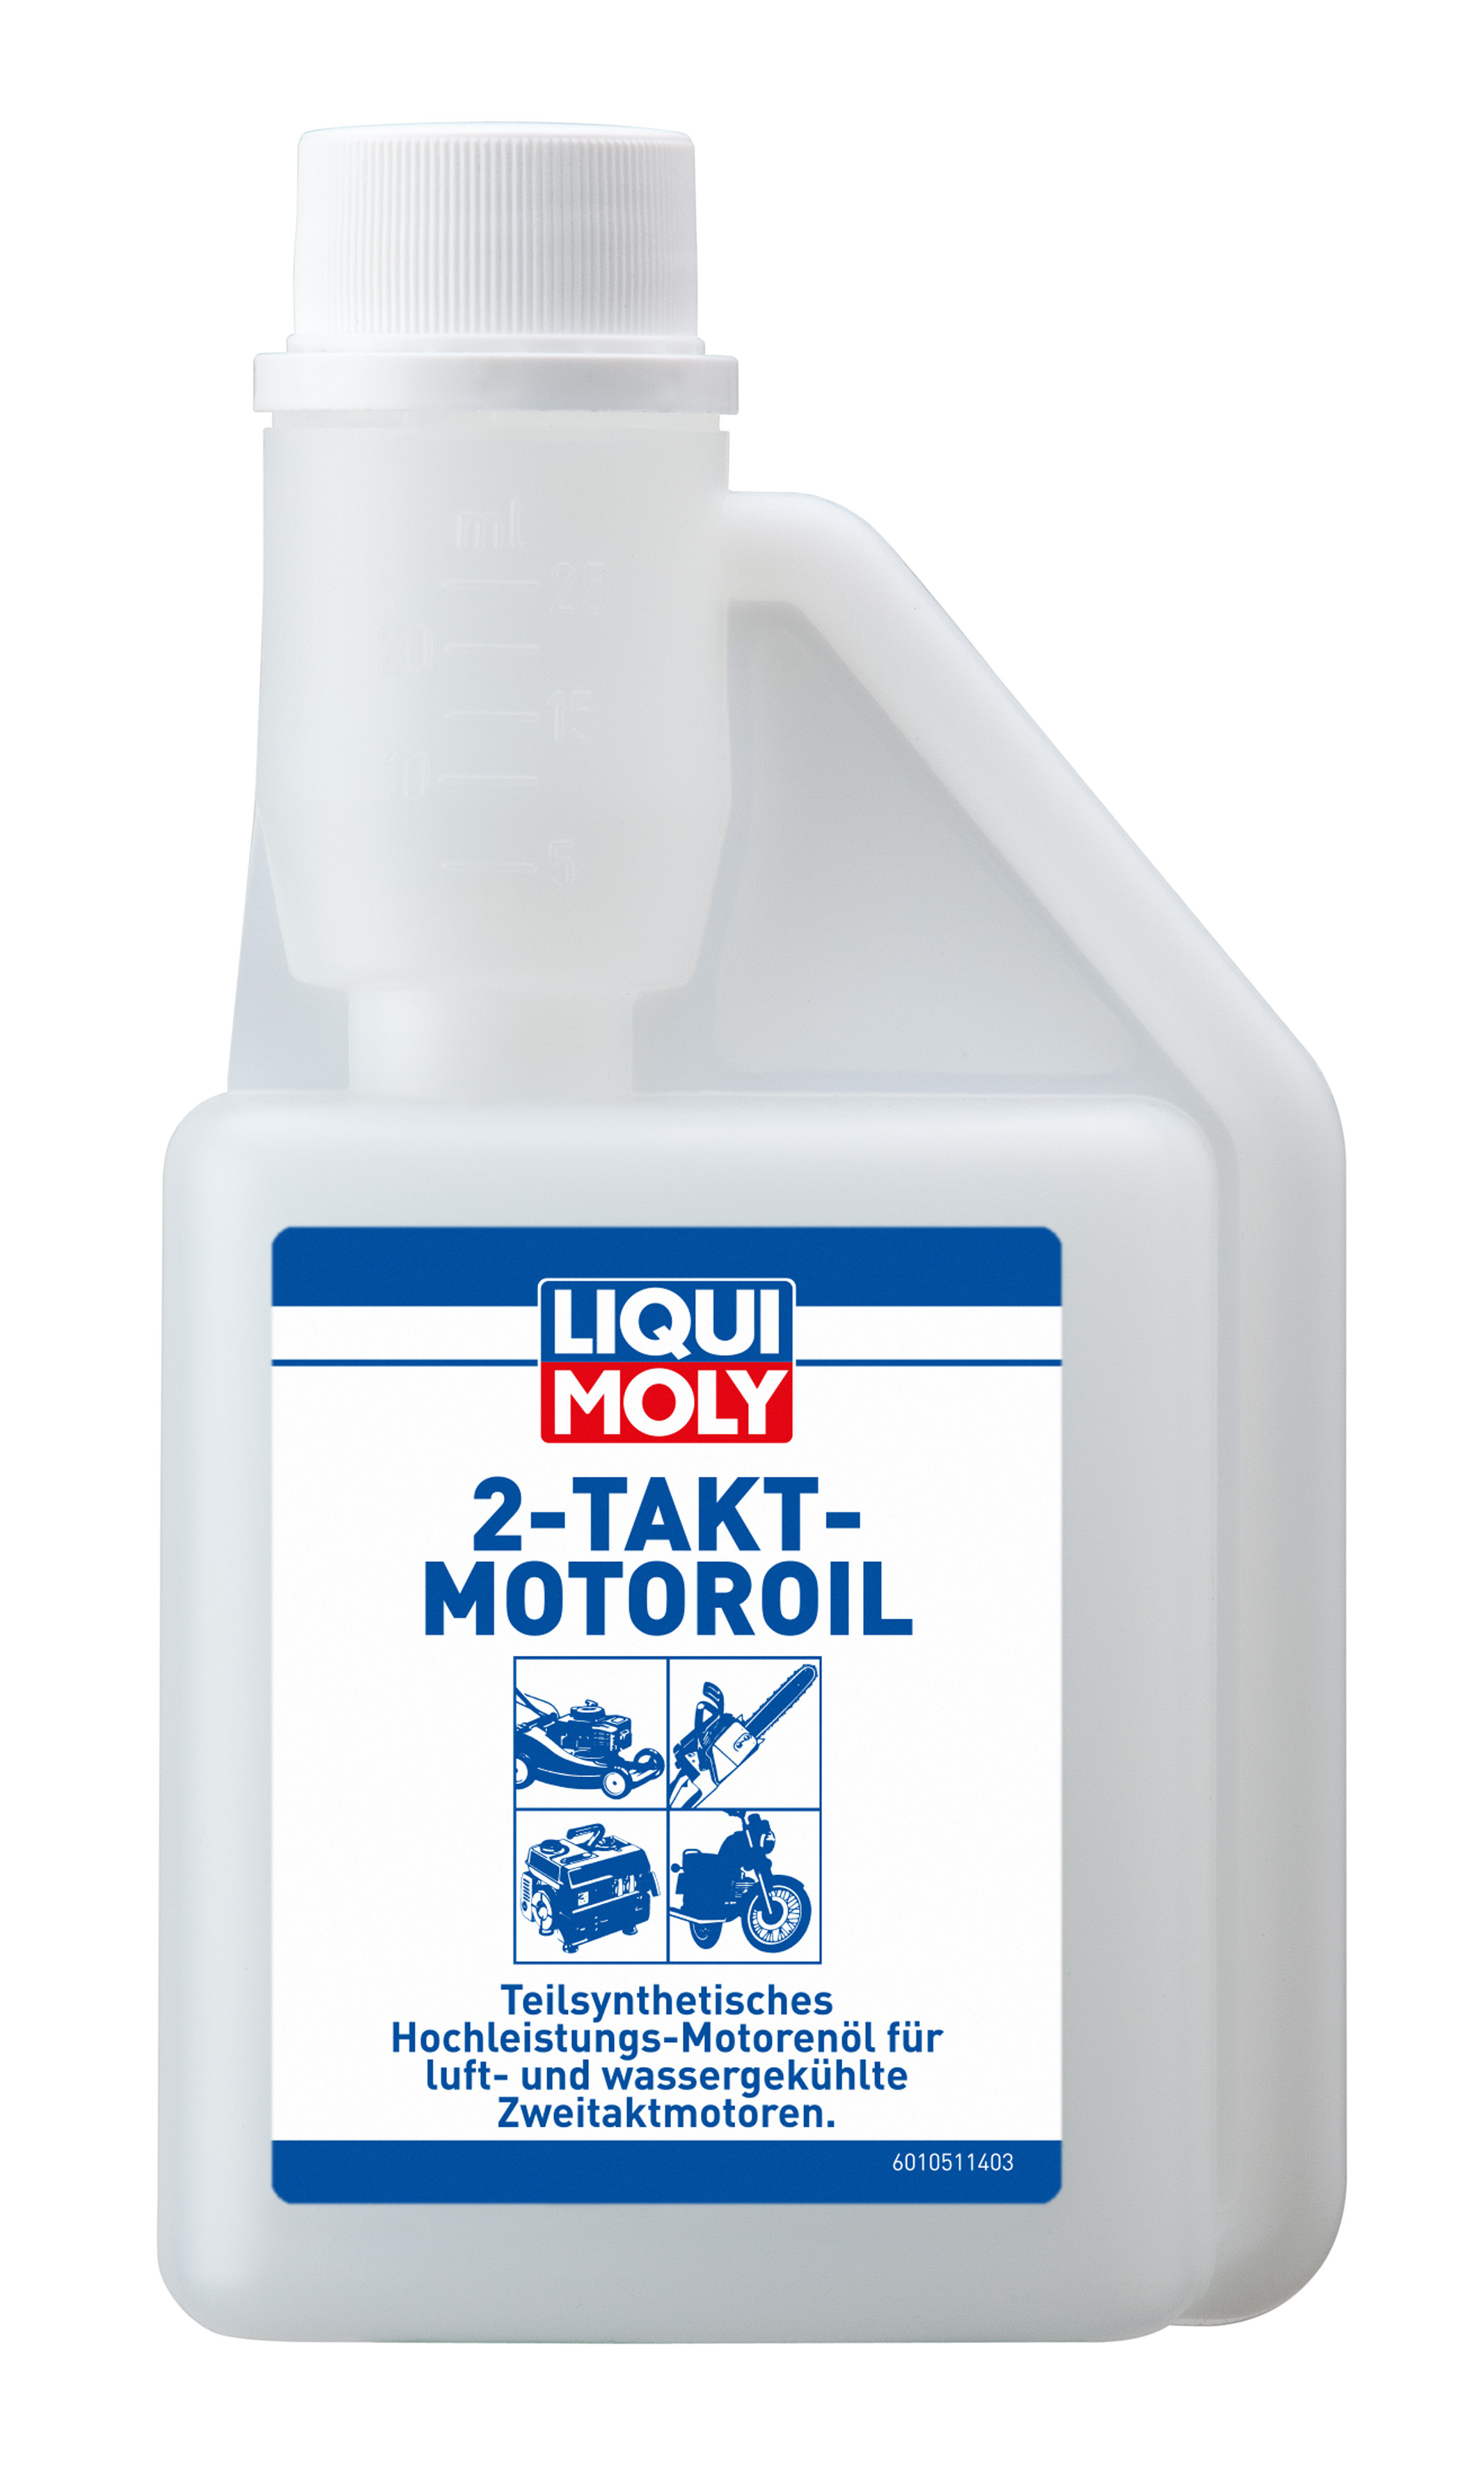 Liqui Moly 1051 2-Takt-Motoroil selbstmischend teilsynthetisches